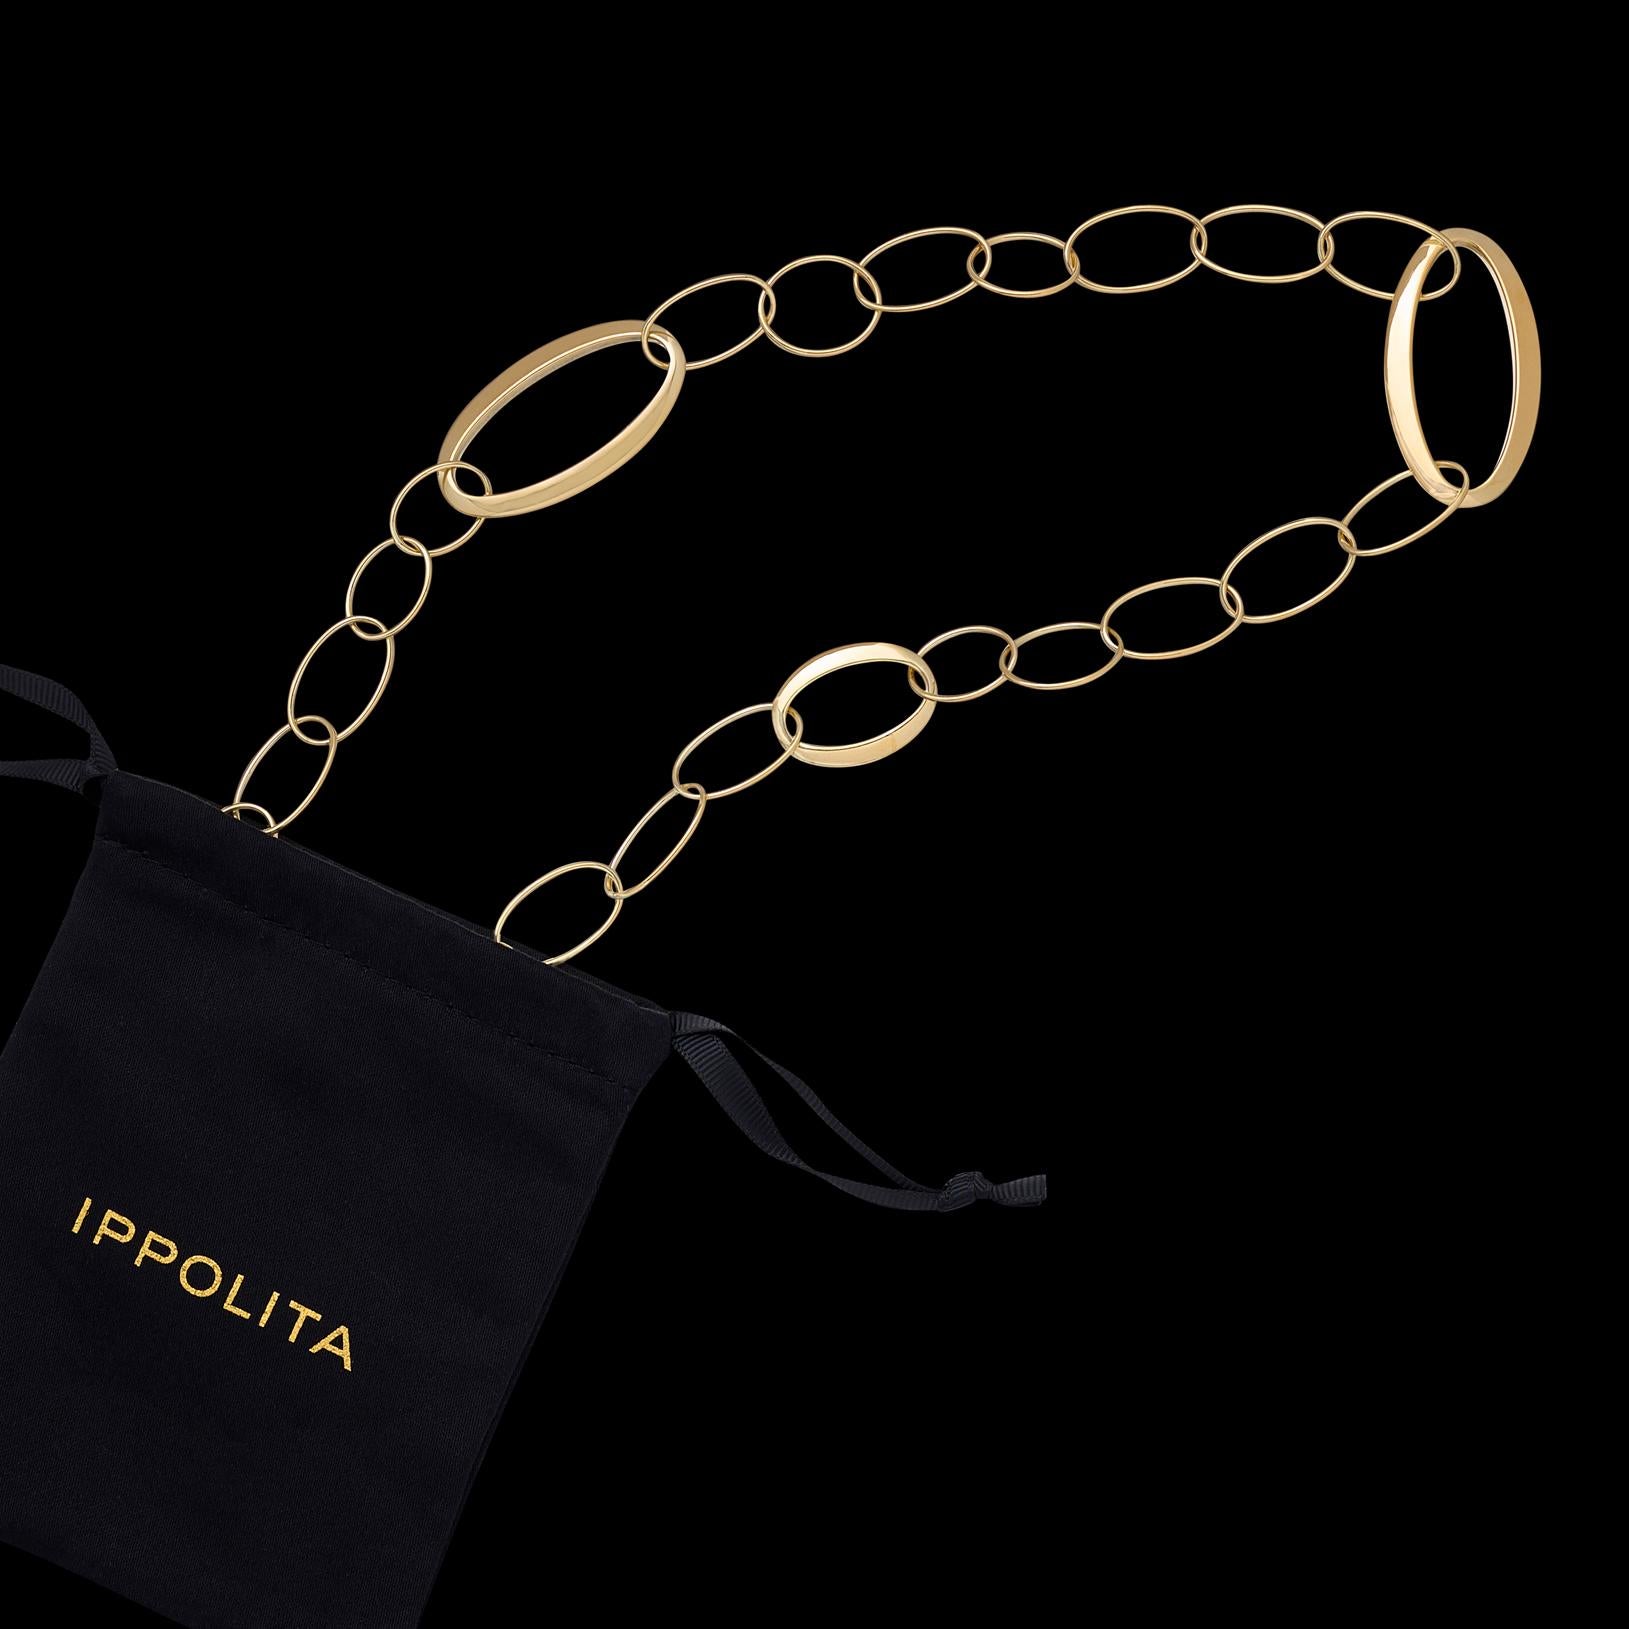 Women's Ippolita Classico Chain Necklace in 18K Gold For Sale